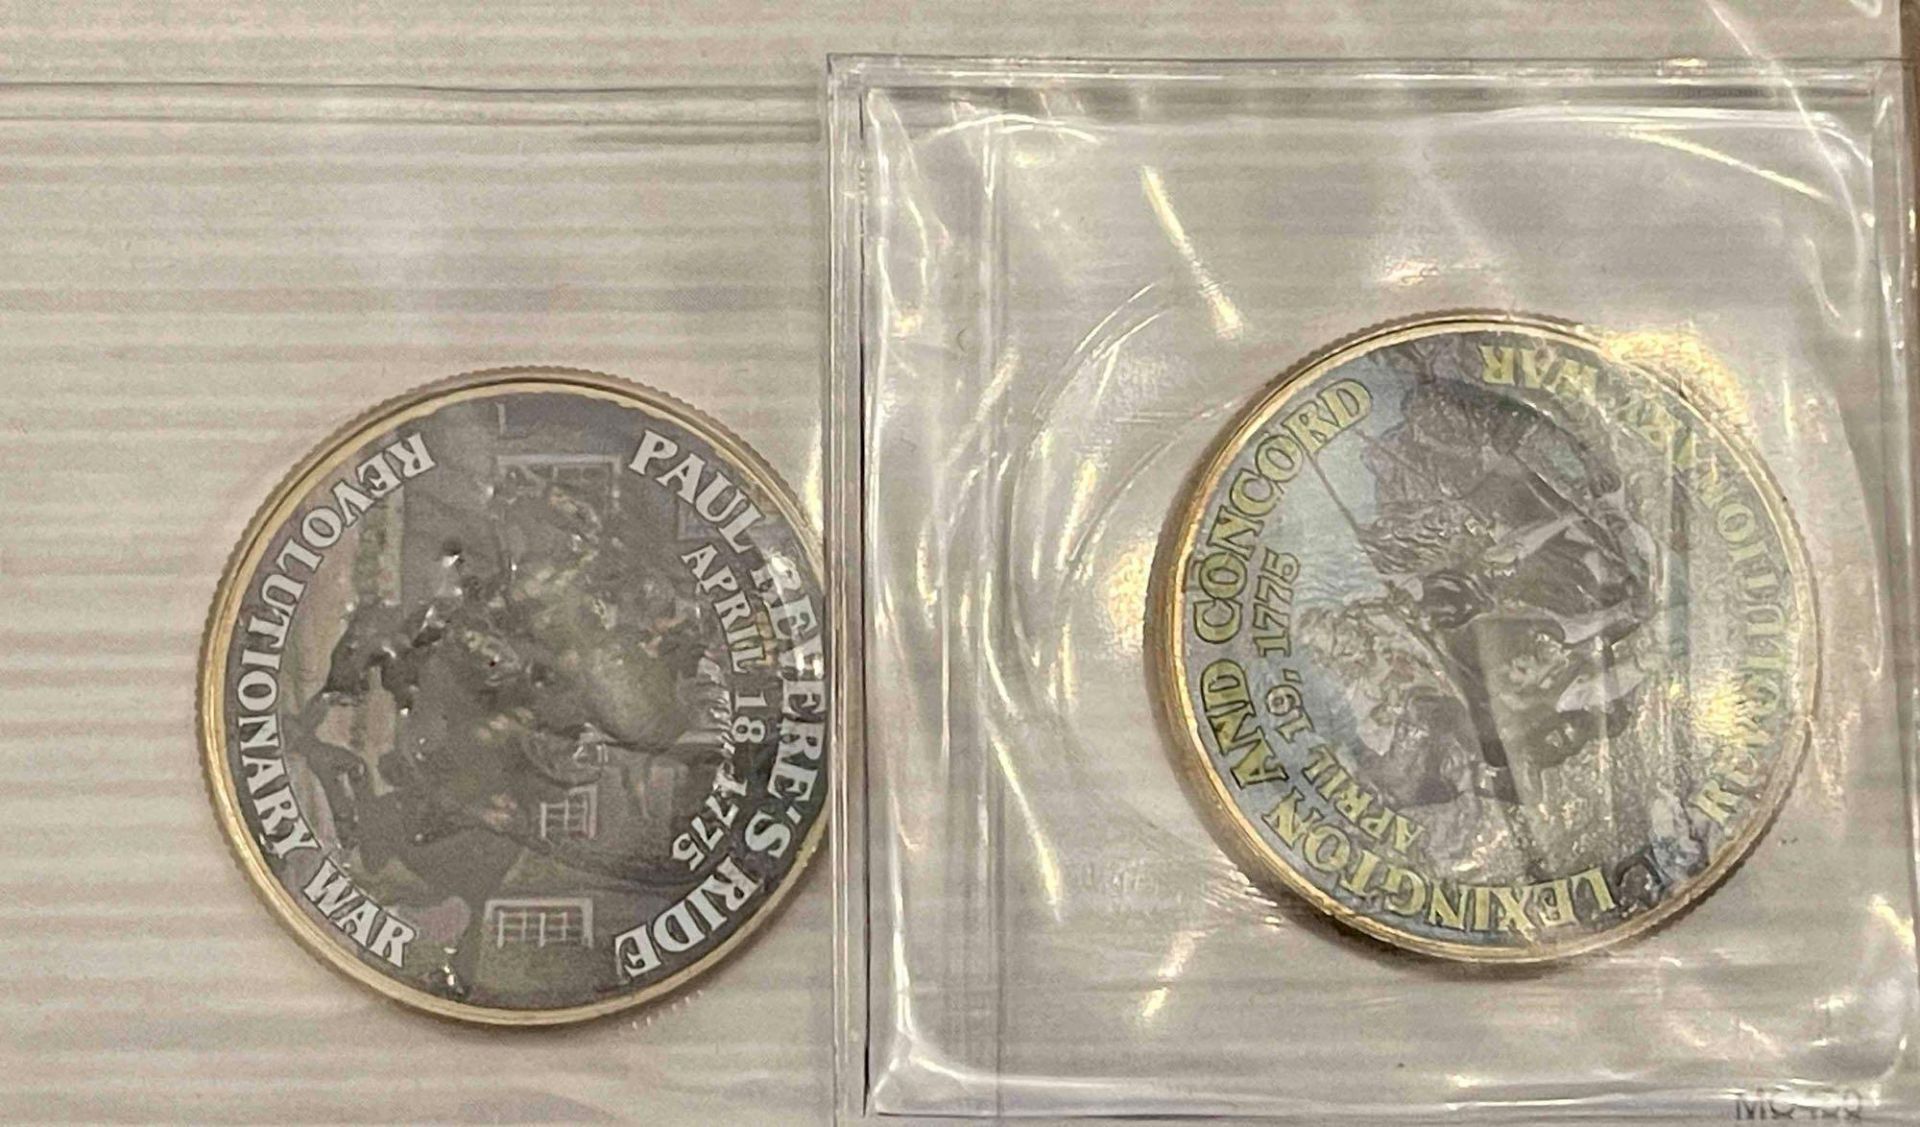 Eisenhower Ike Dollars, Franklin Silver Half Dollars, Kennedy Half Dollars - Image 6 of 9